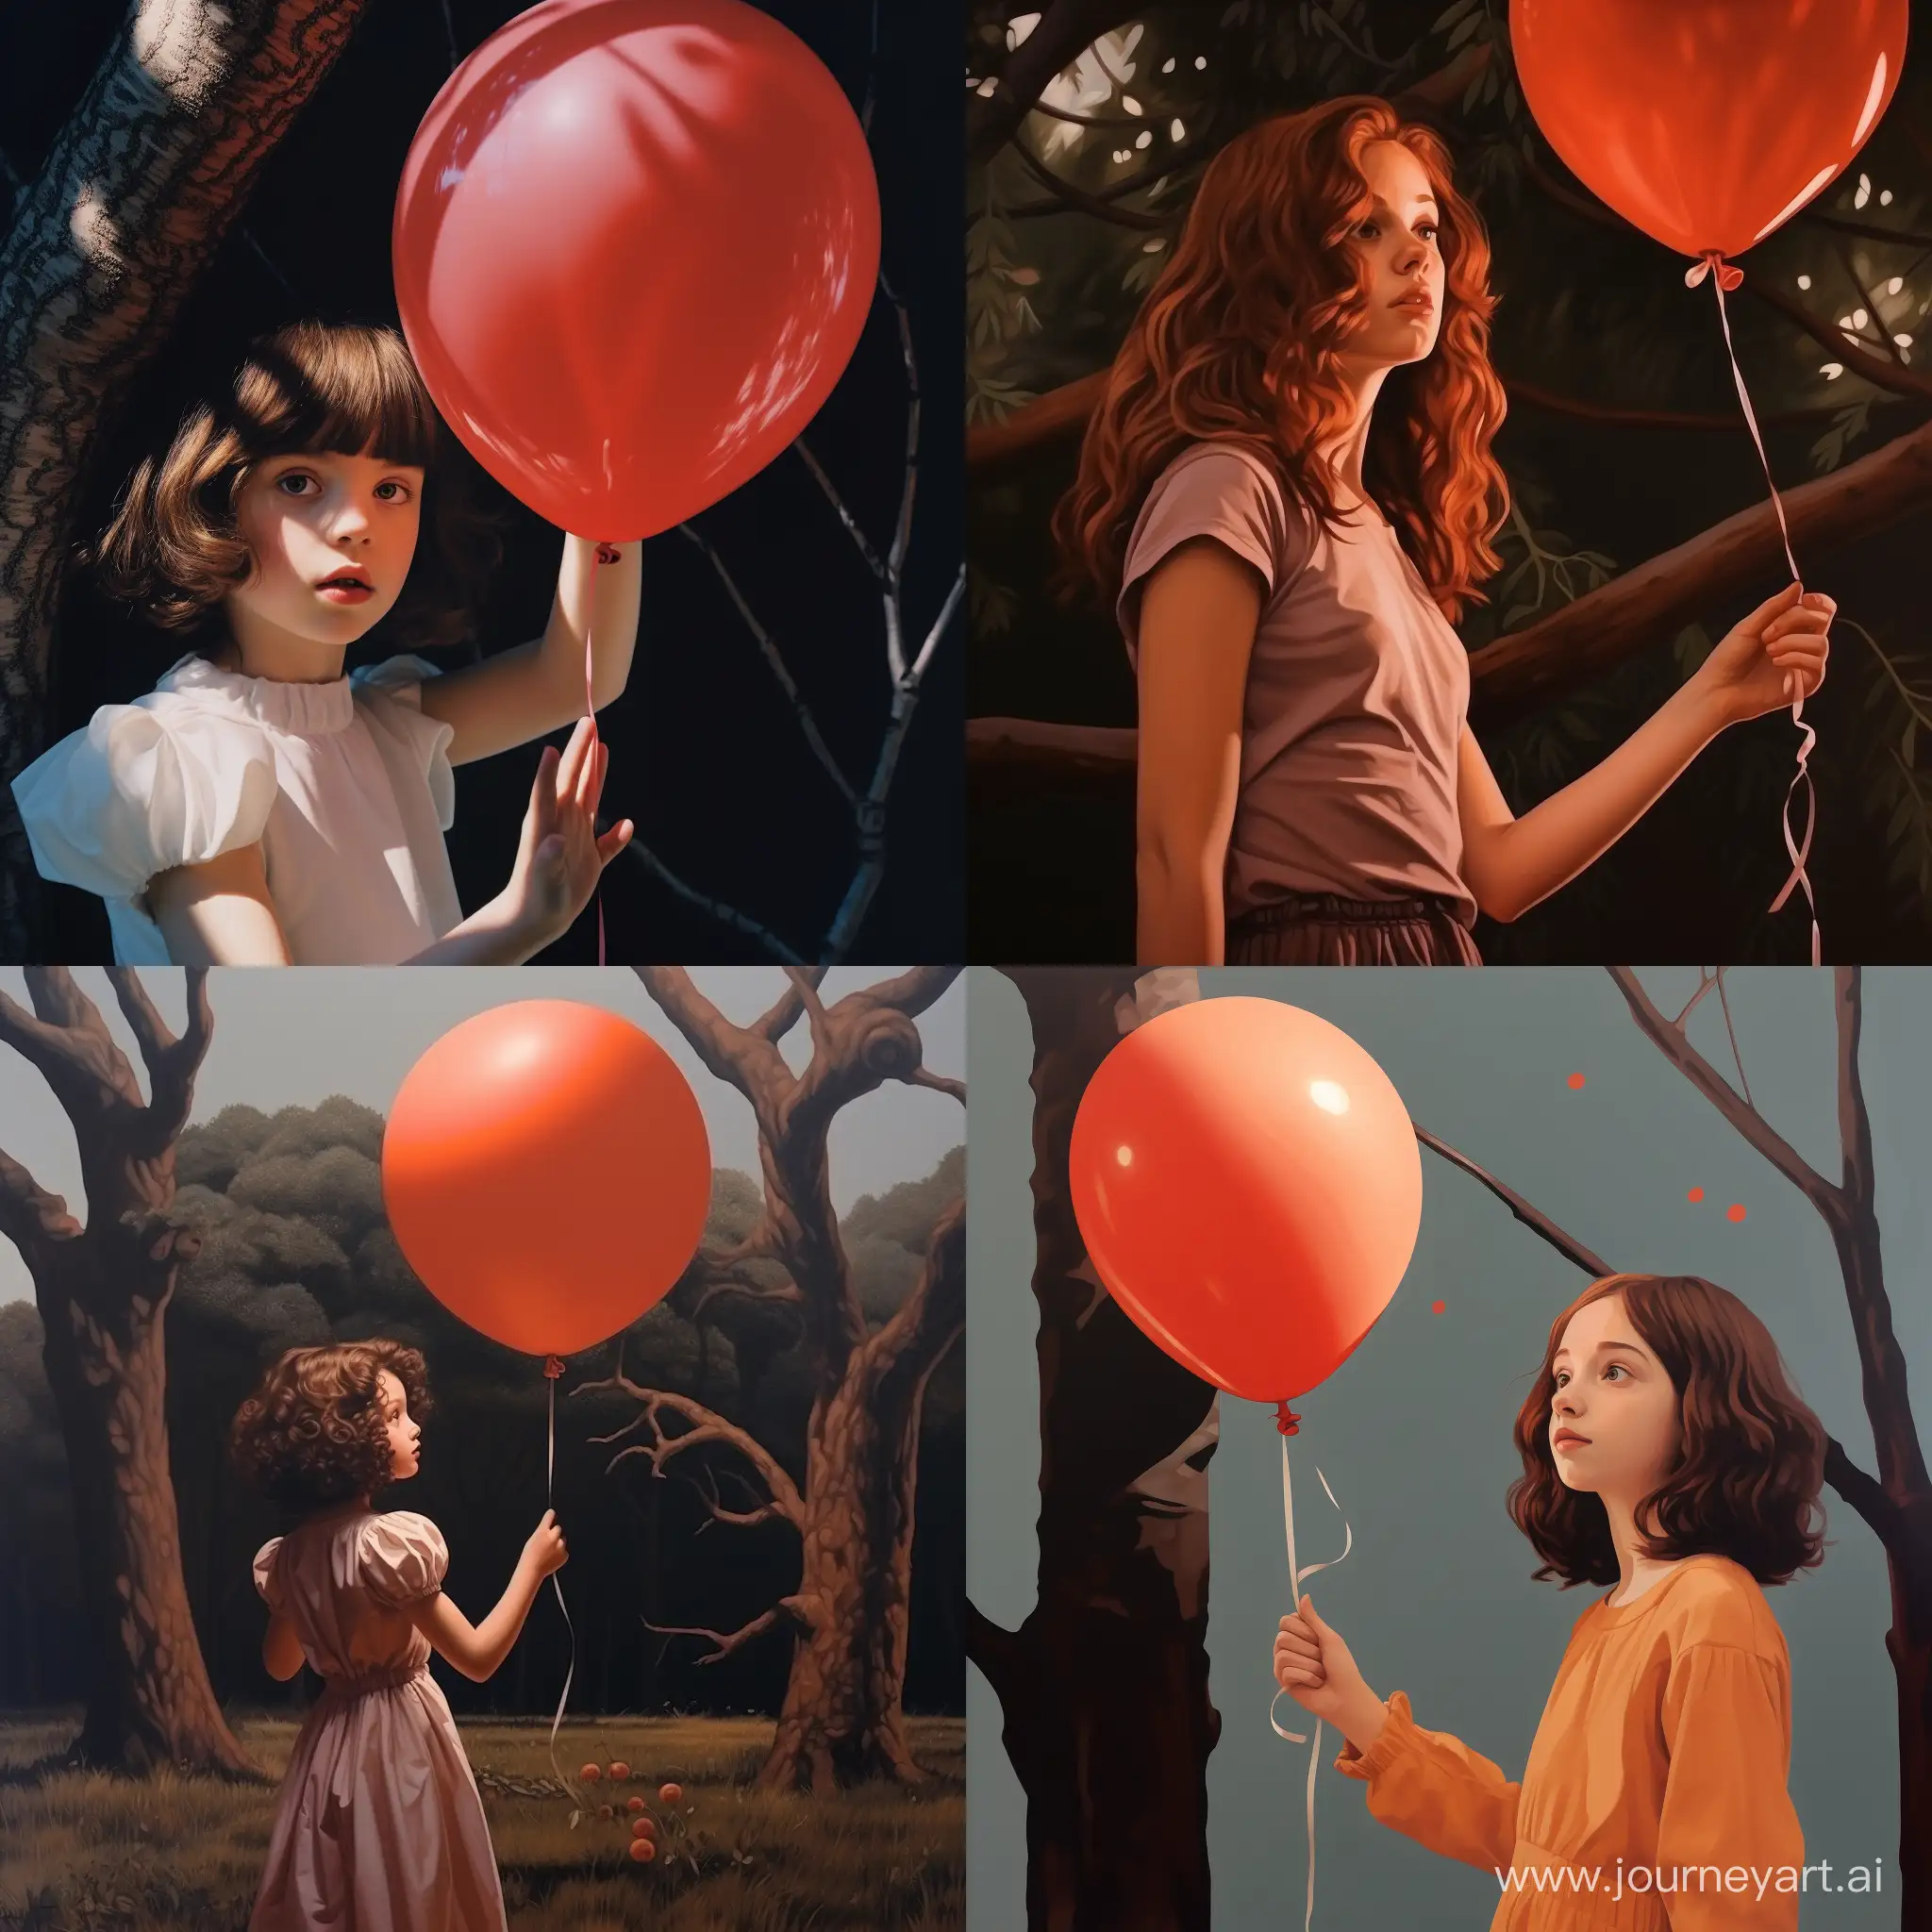 Joyful-Girl-with-Inflatable-Balloon-by-the-Tree